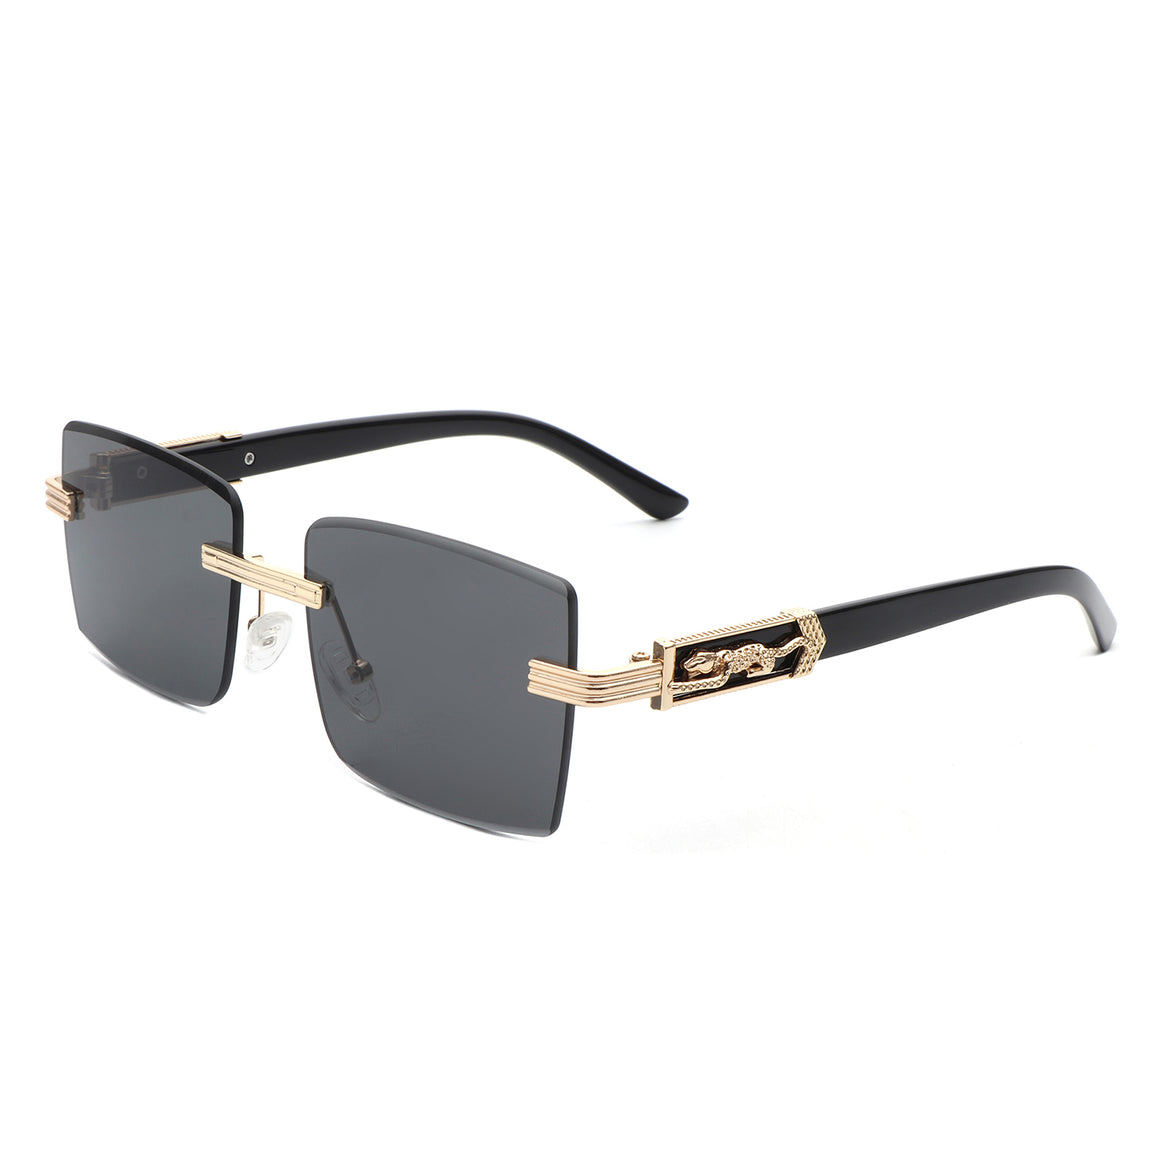 Tycho - Rimless Square Retro Tinted Fashion Flat Top Sunglasses